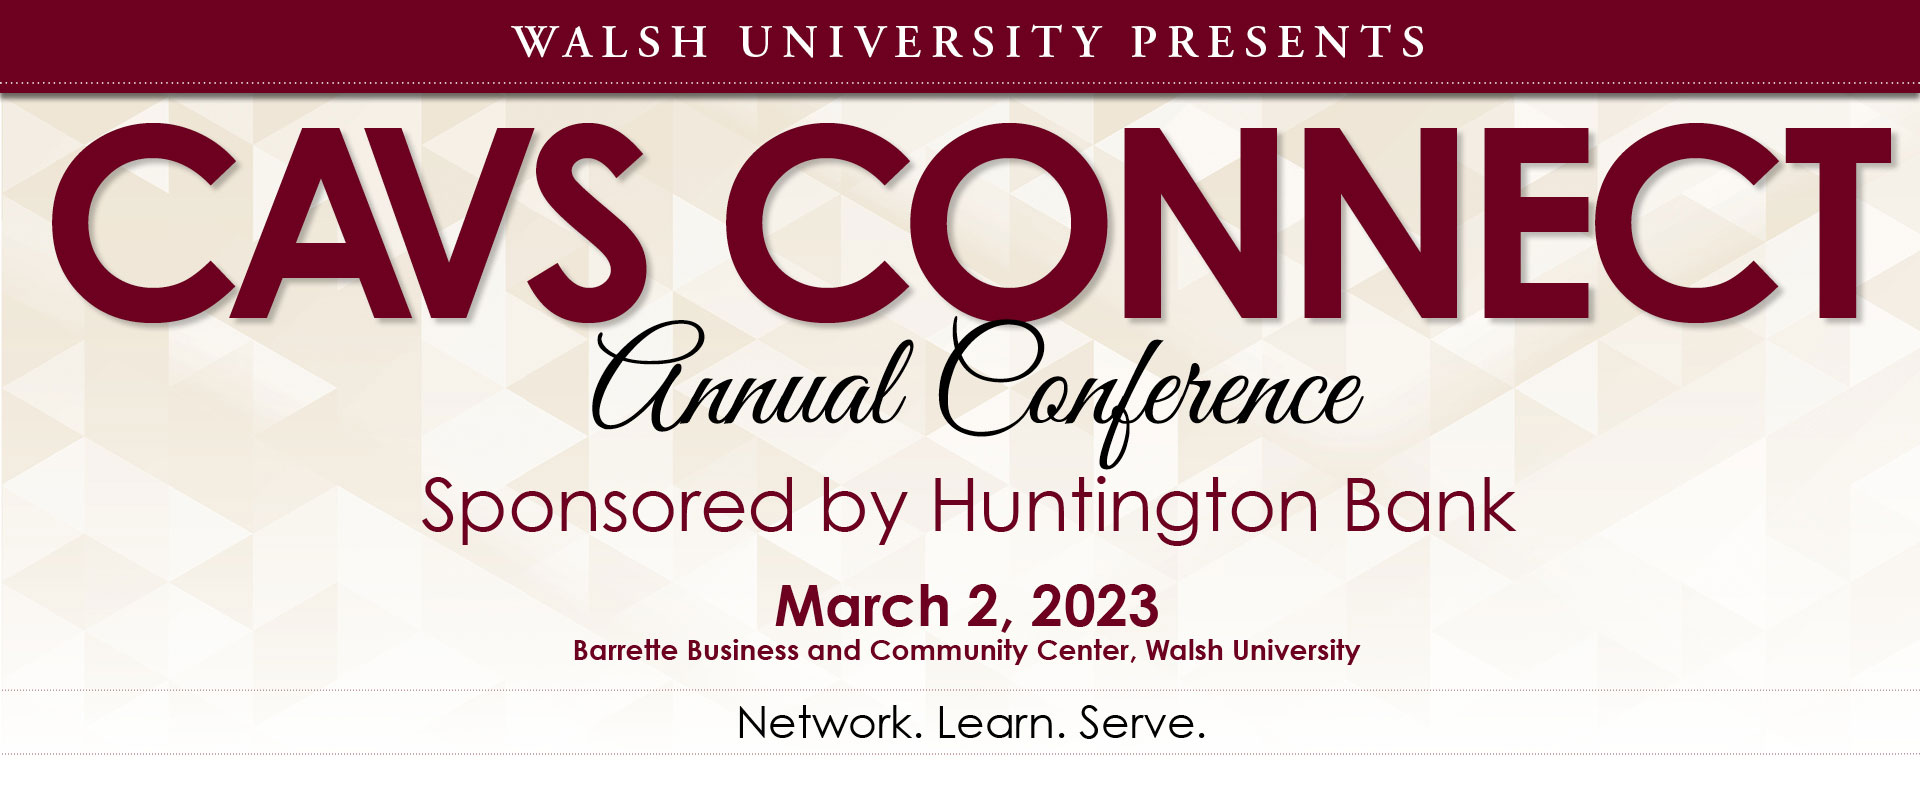 Cavs Connec Annual Conference 